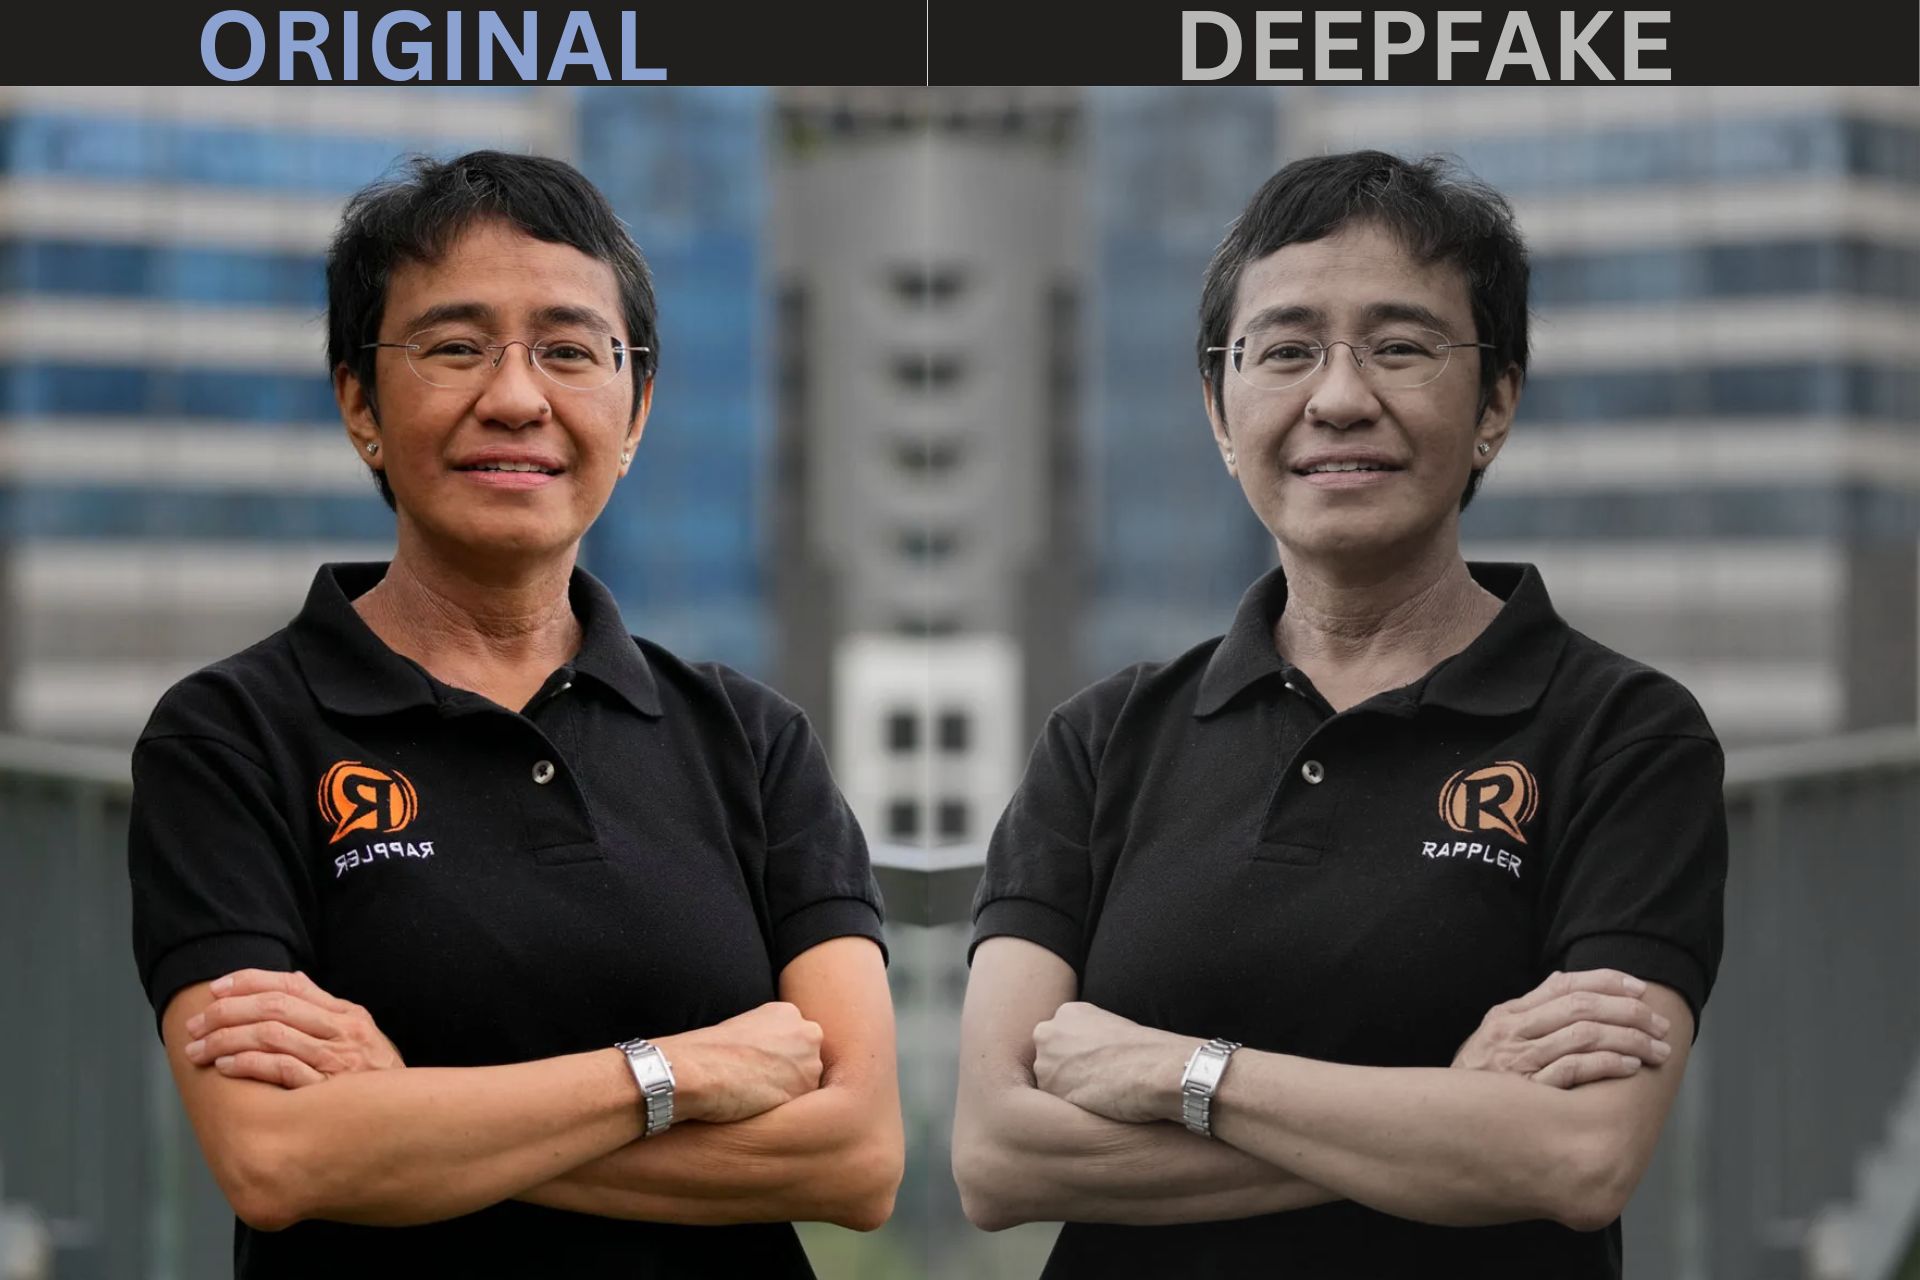 Original video vs deepfake video of Maria Ressa